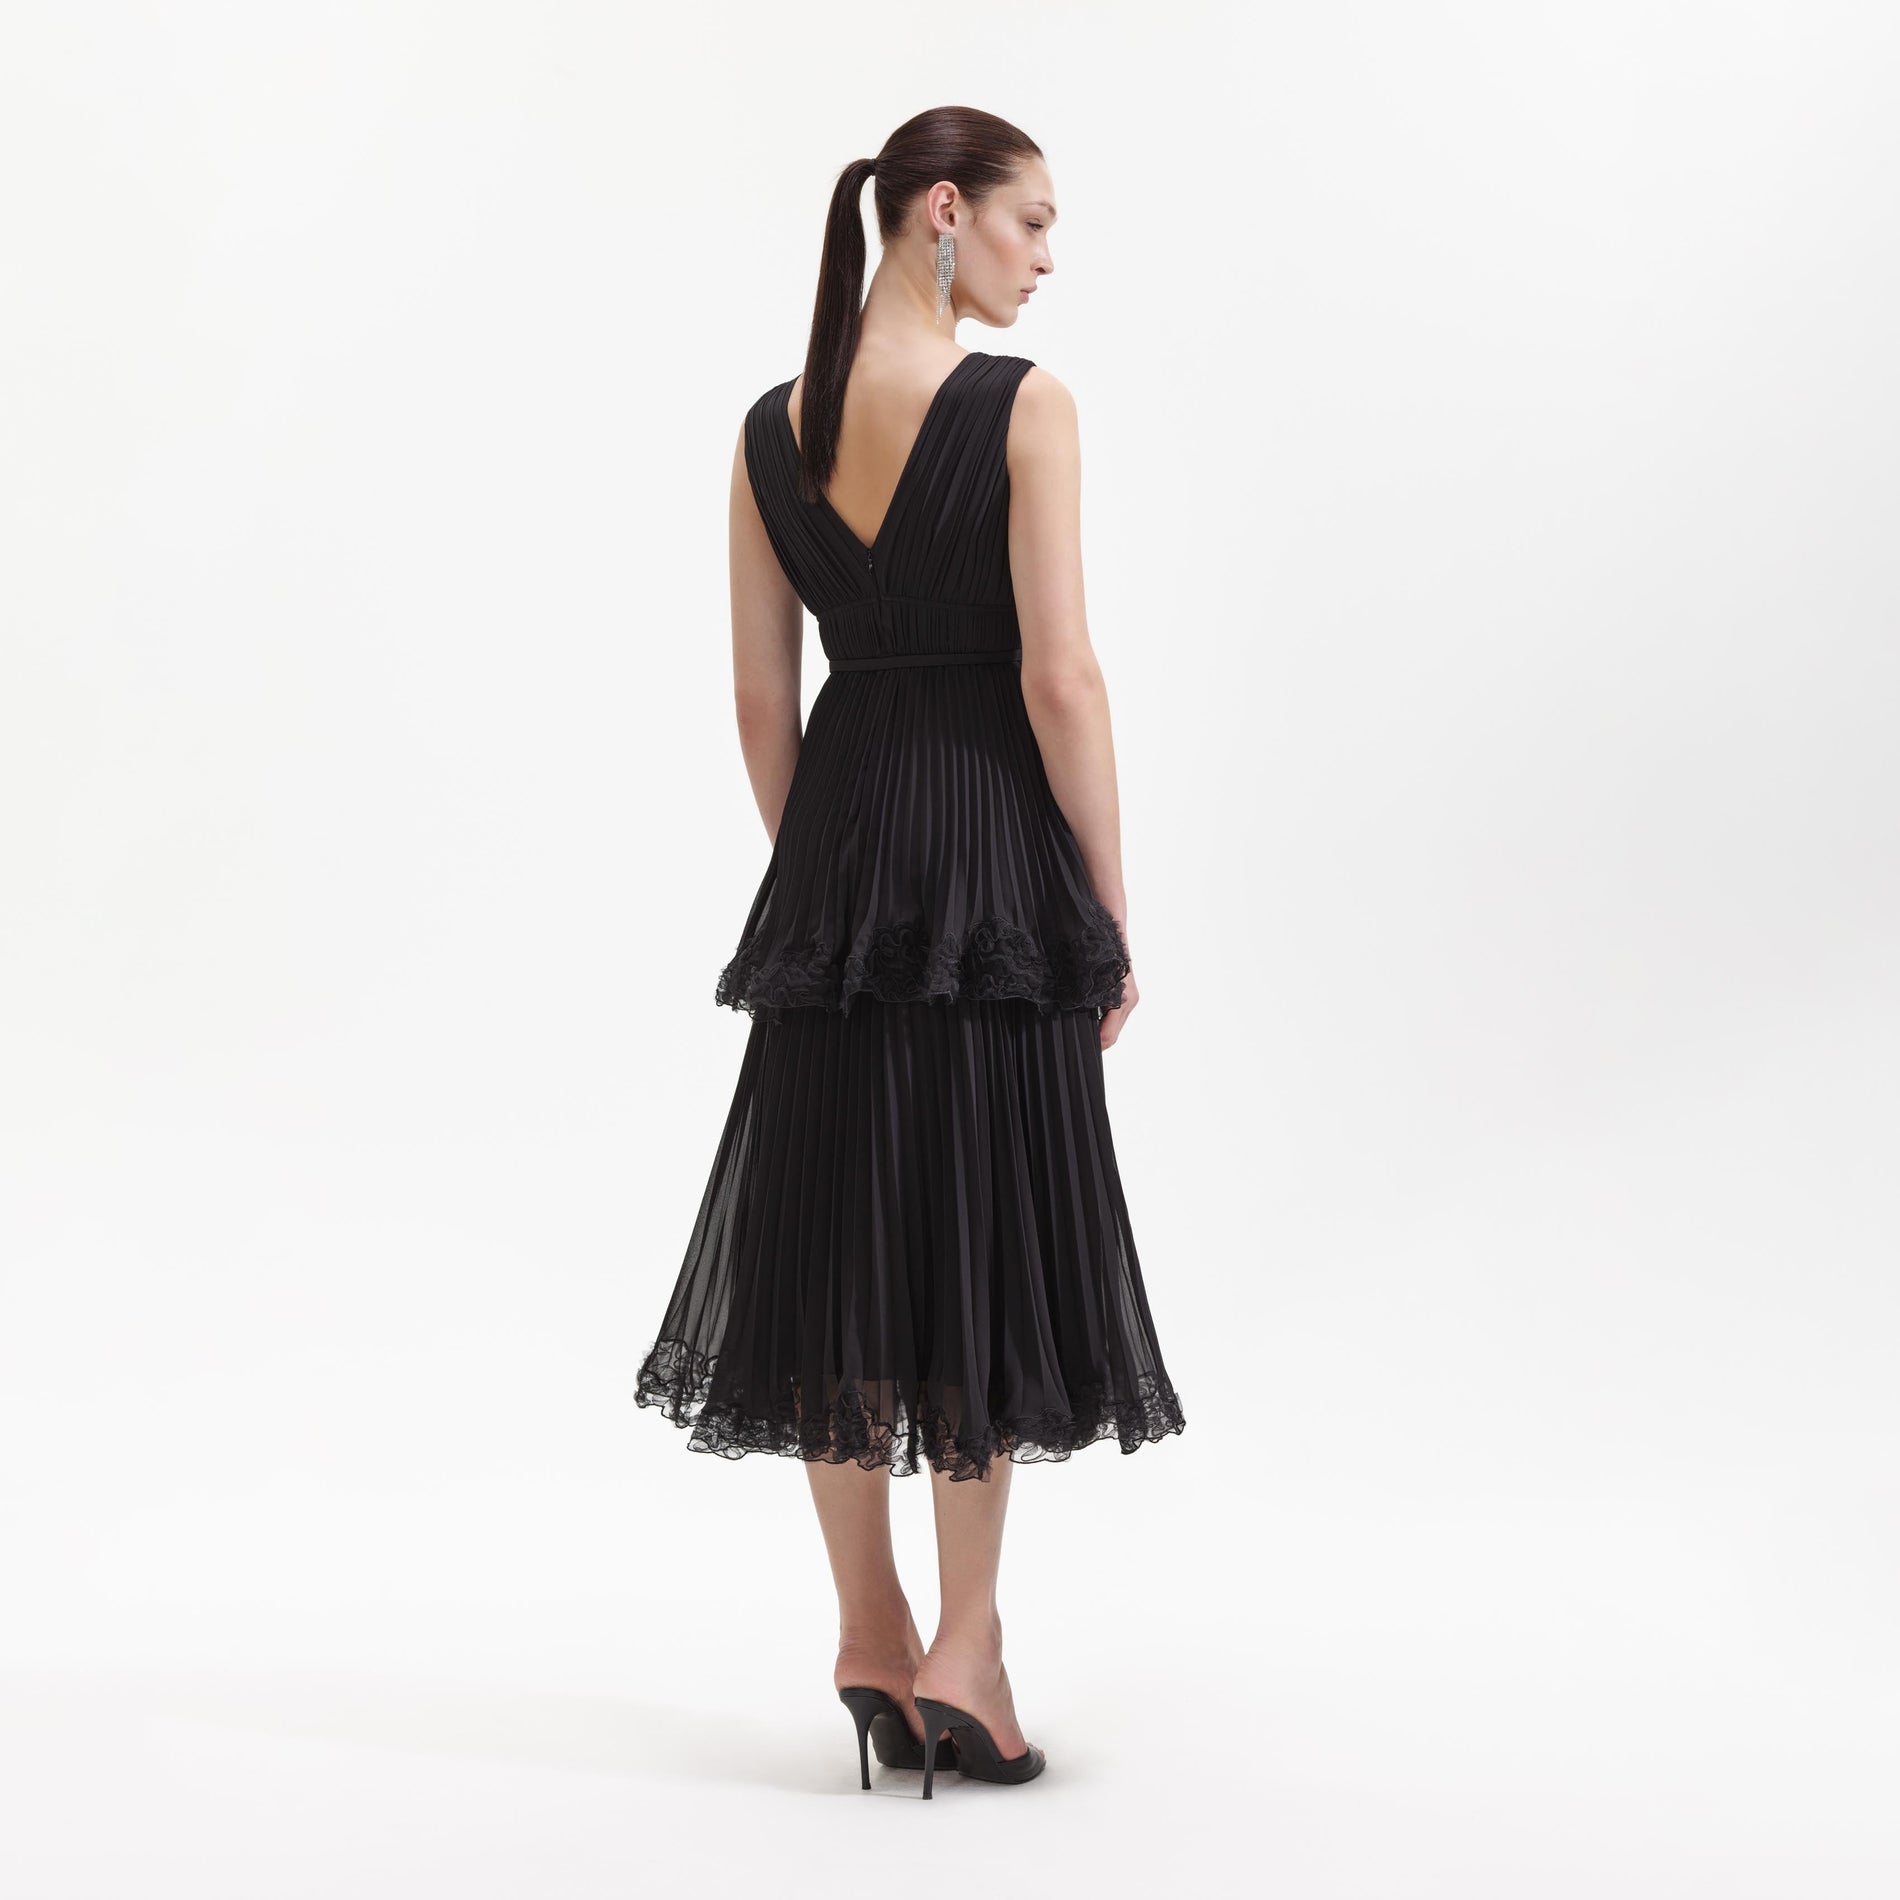 A Woman wearing the Black Chiffon Tier Midi Dress